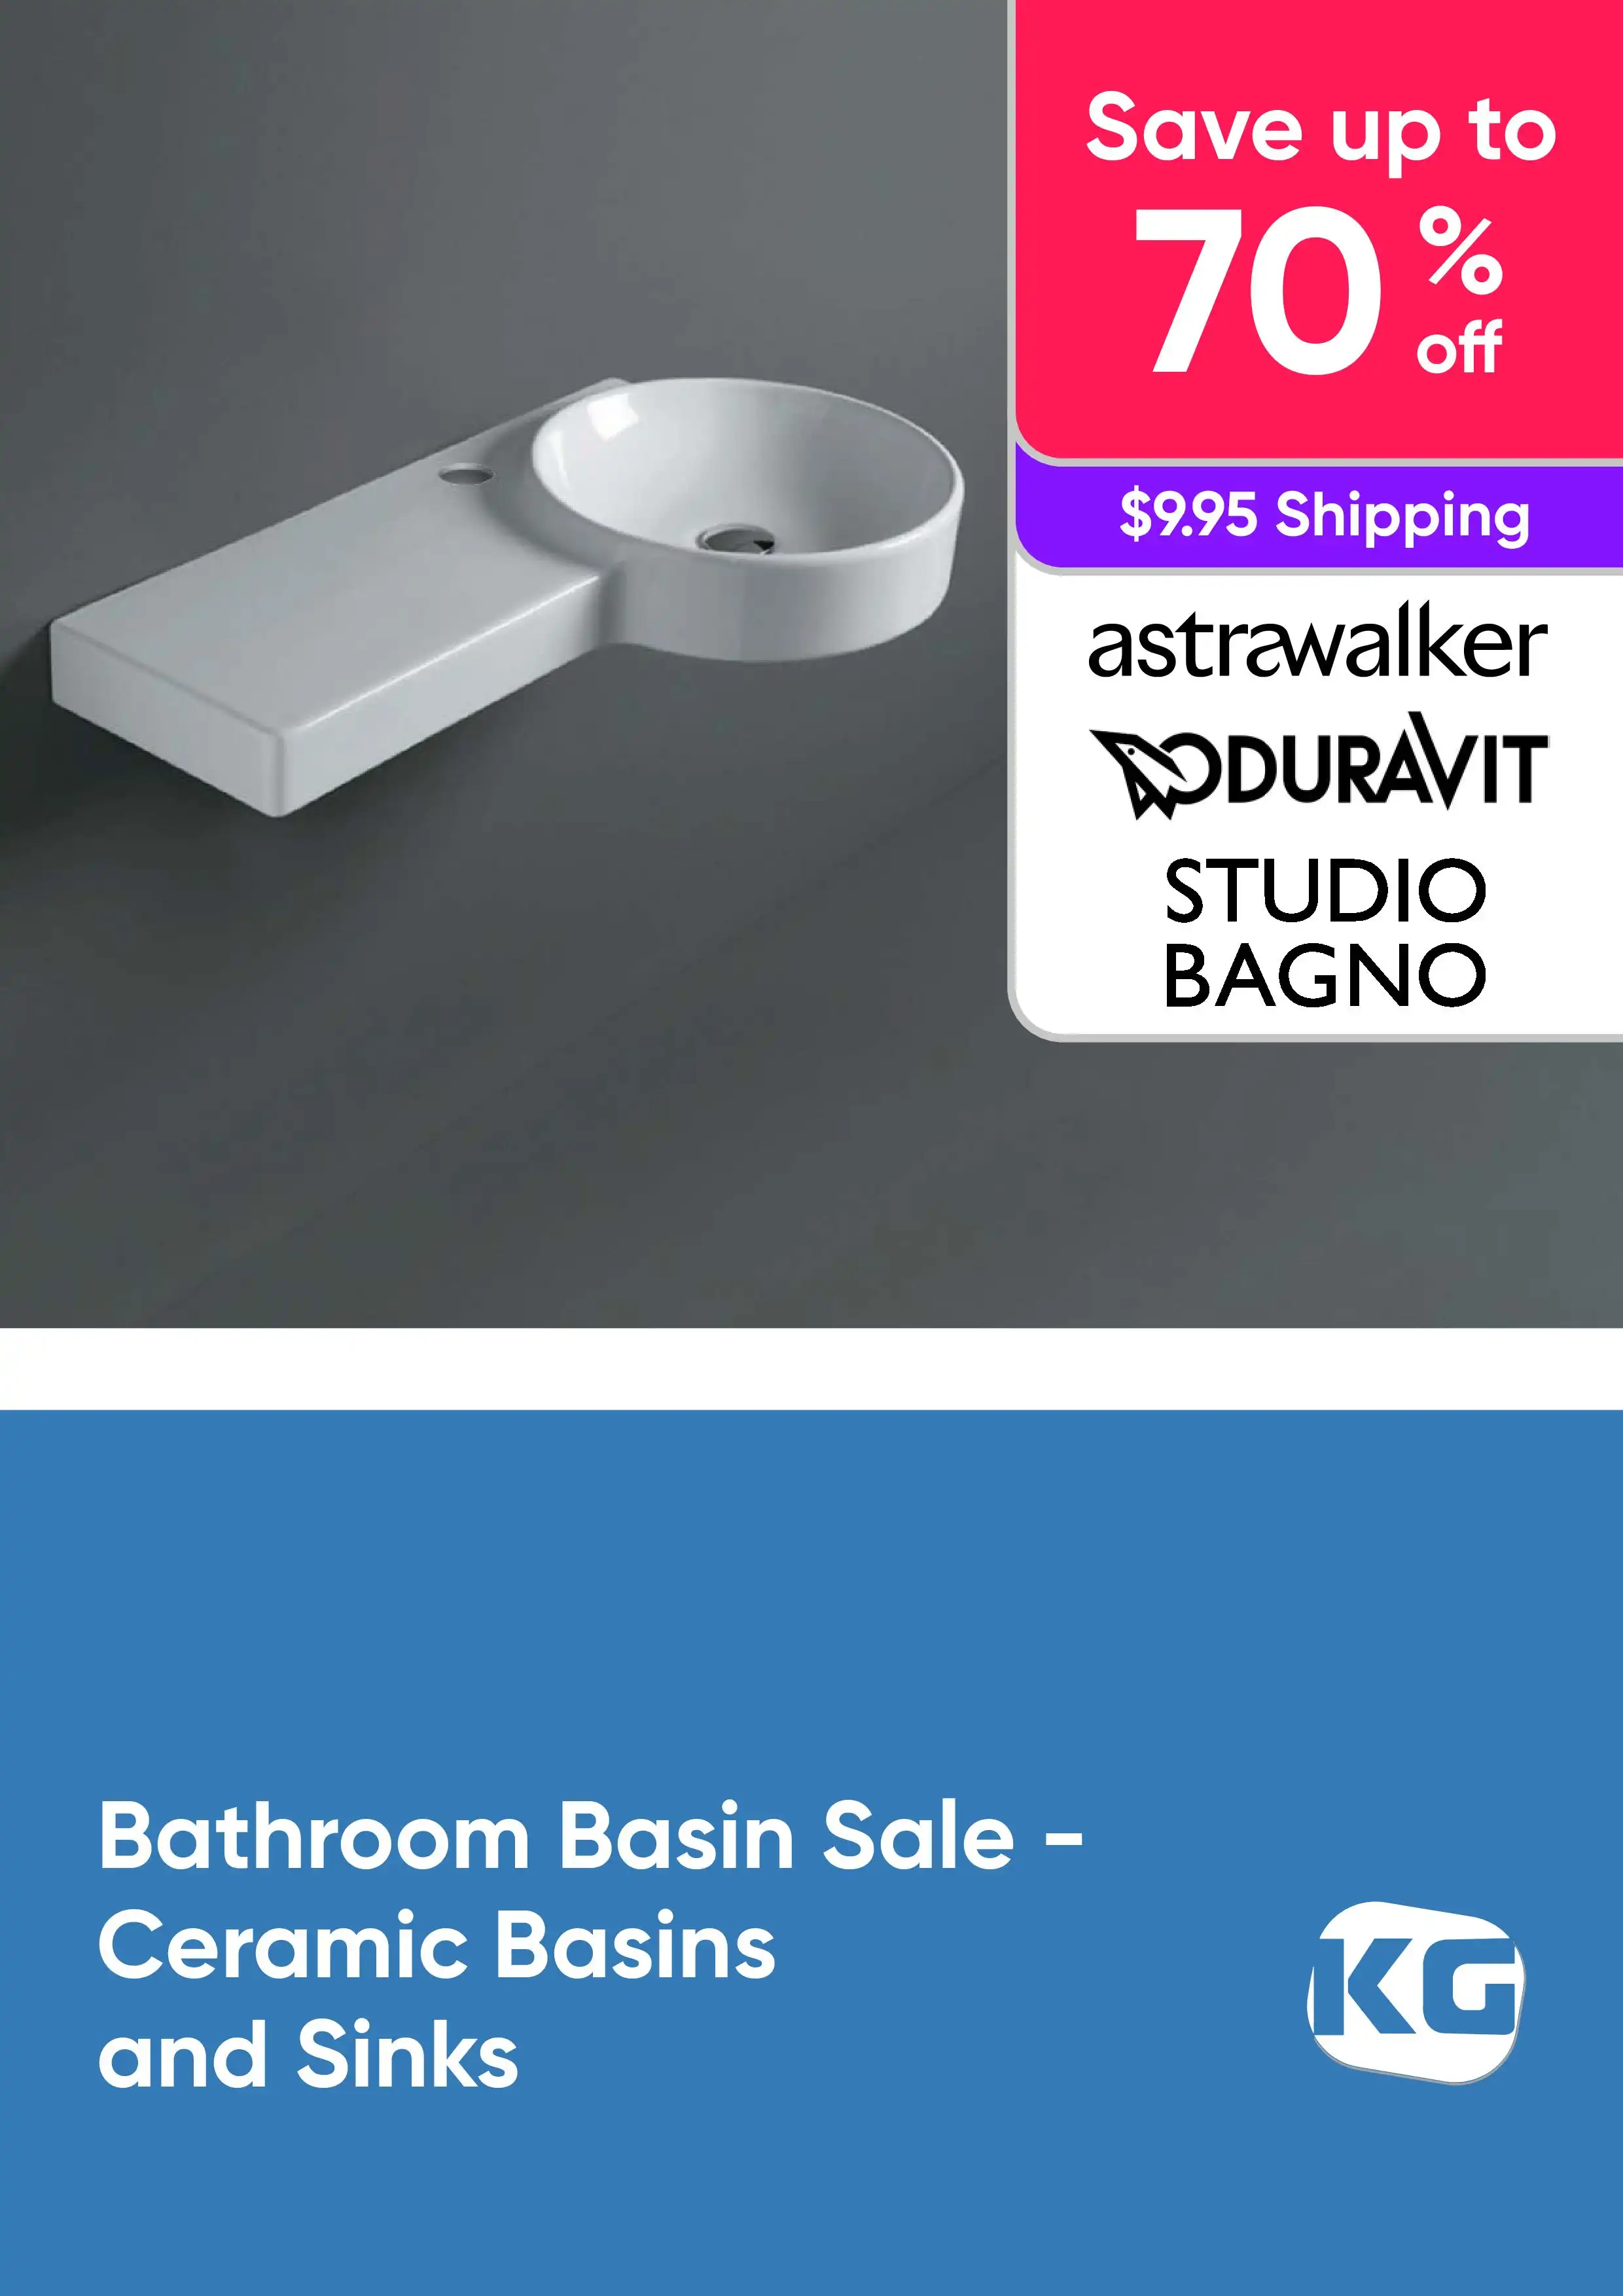 Bathroom Basin Sale - Save Up to 70% Off on A Range of Bathroom Ceramic Basins and Sinks